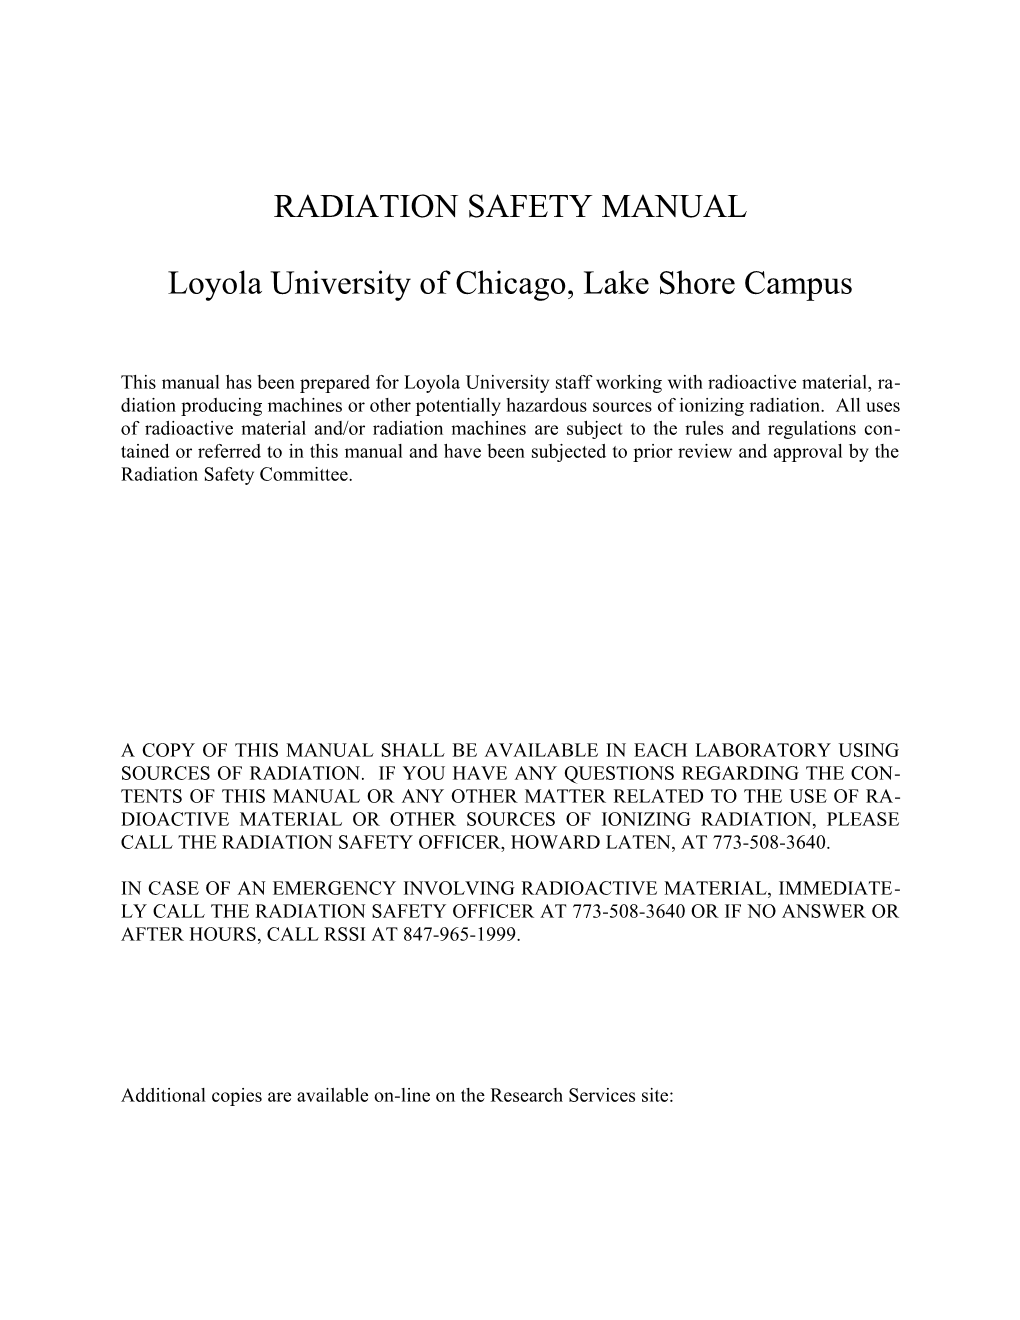 Radiation Safety Manual s1